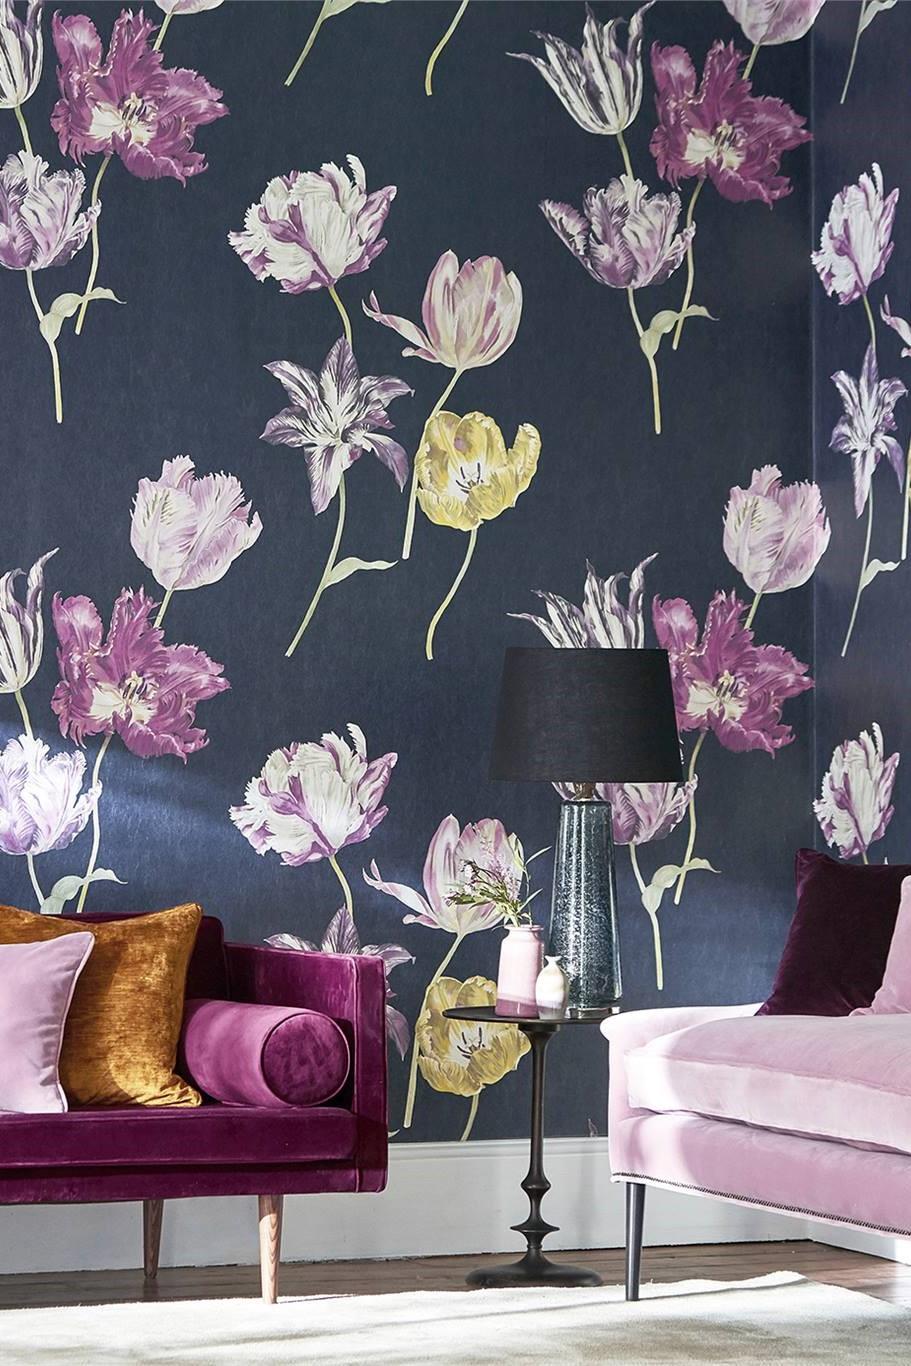 Tulipomania-Wallpaper.jpg